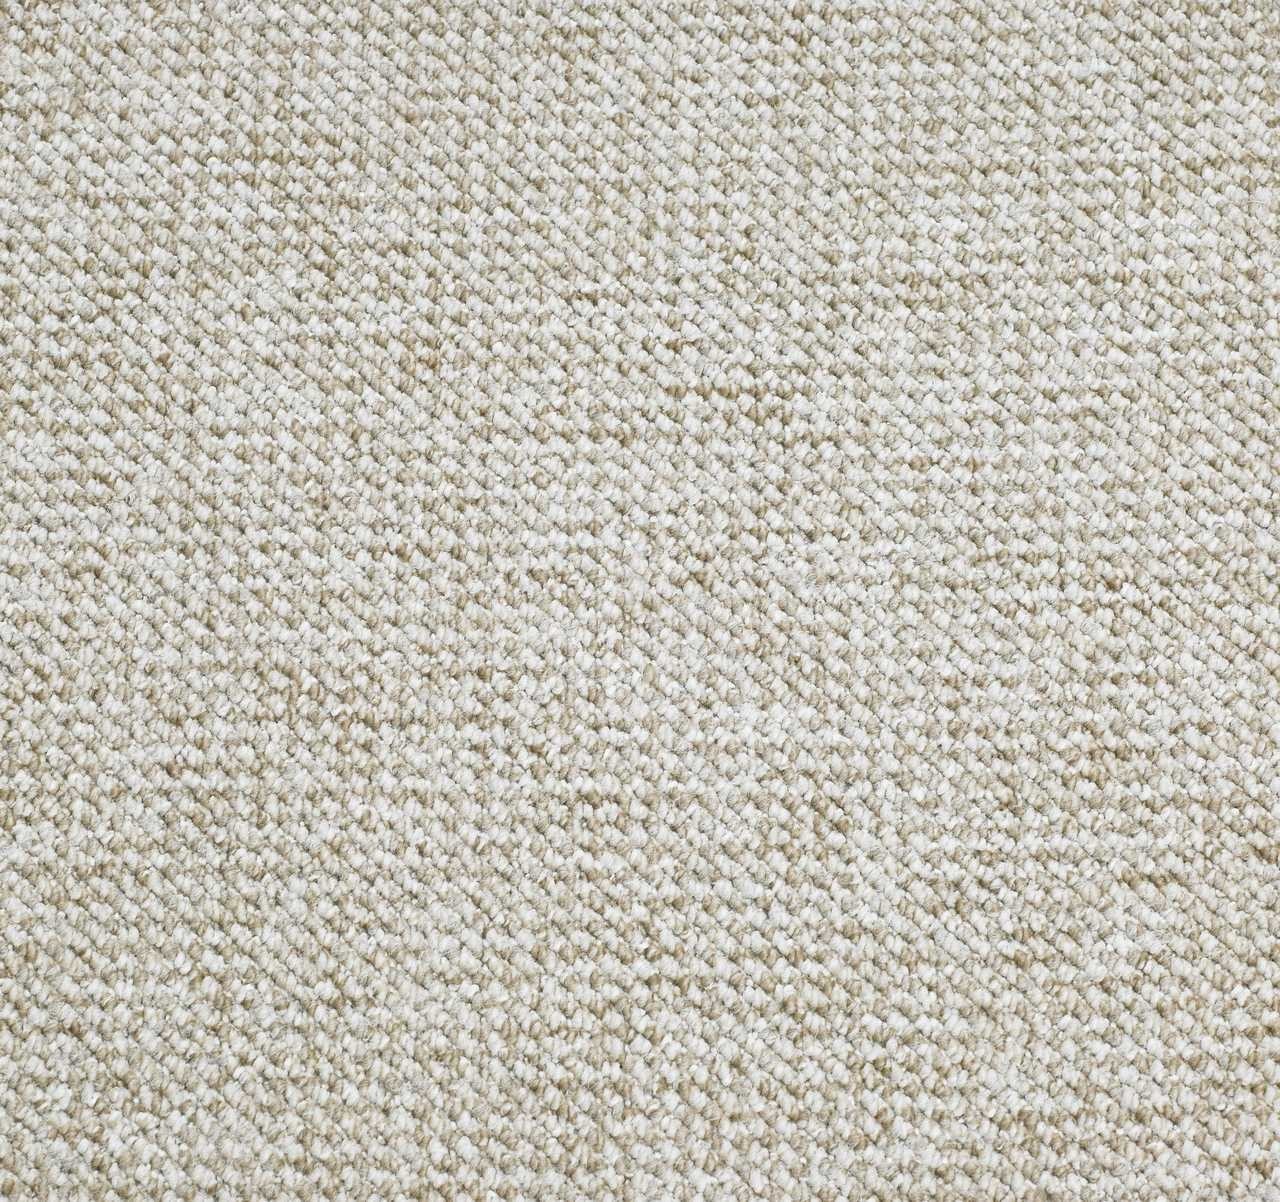 berber carpets buy cheap carpets online visions carpet berber - 2014-07-31 19:47 OUUGYHB